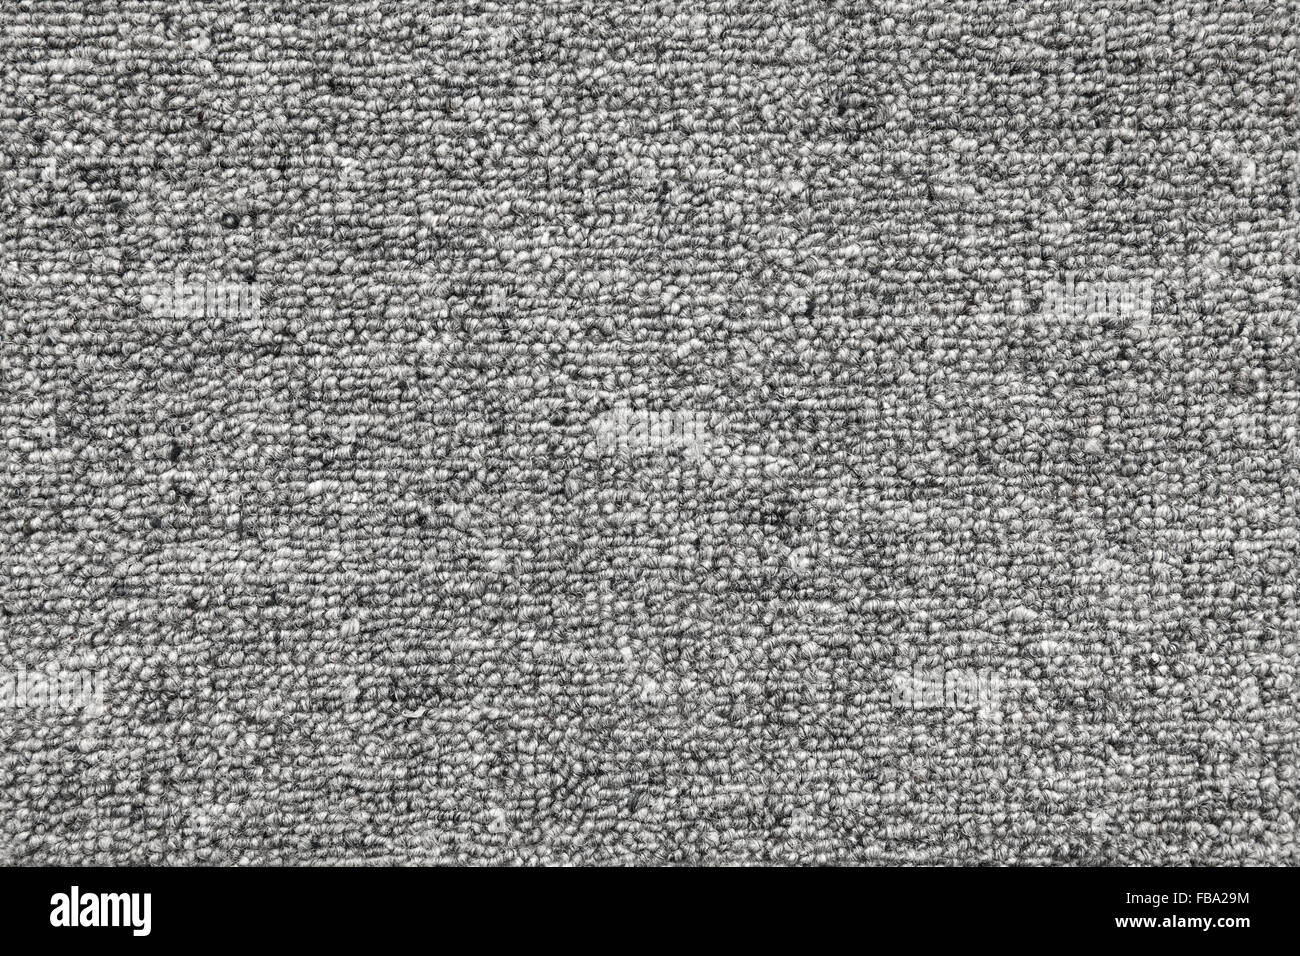 Dunkel grau grobe Stoffmuster, nahtlose Hintergrundtextur Foto Stockfoto